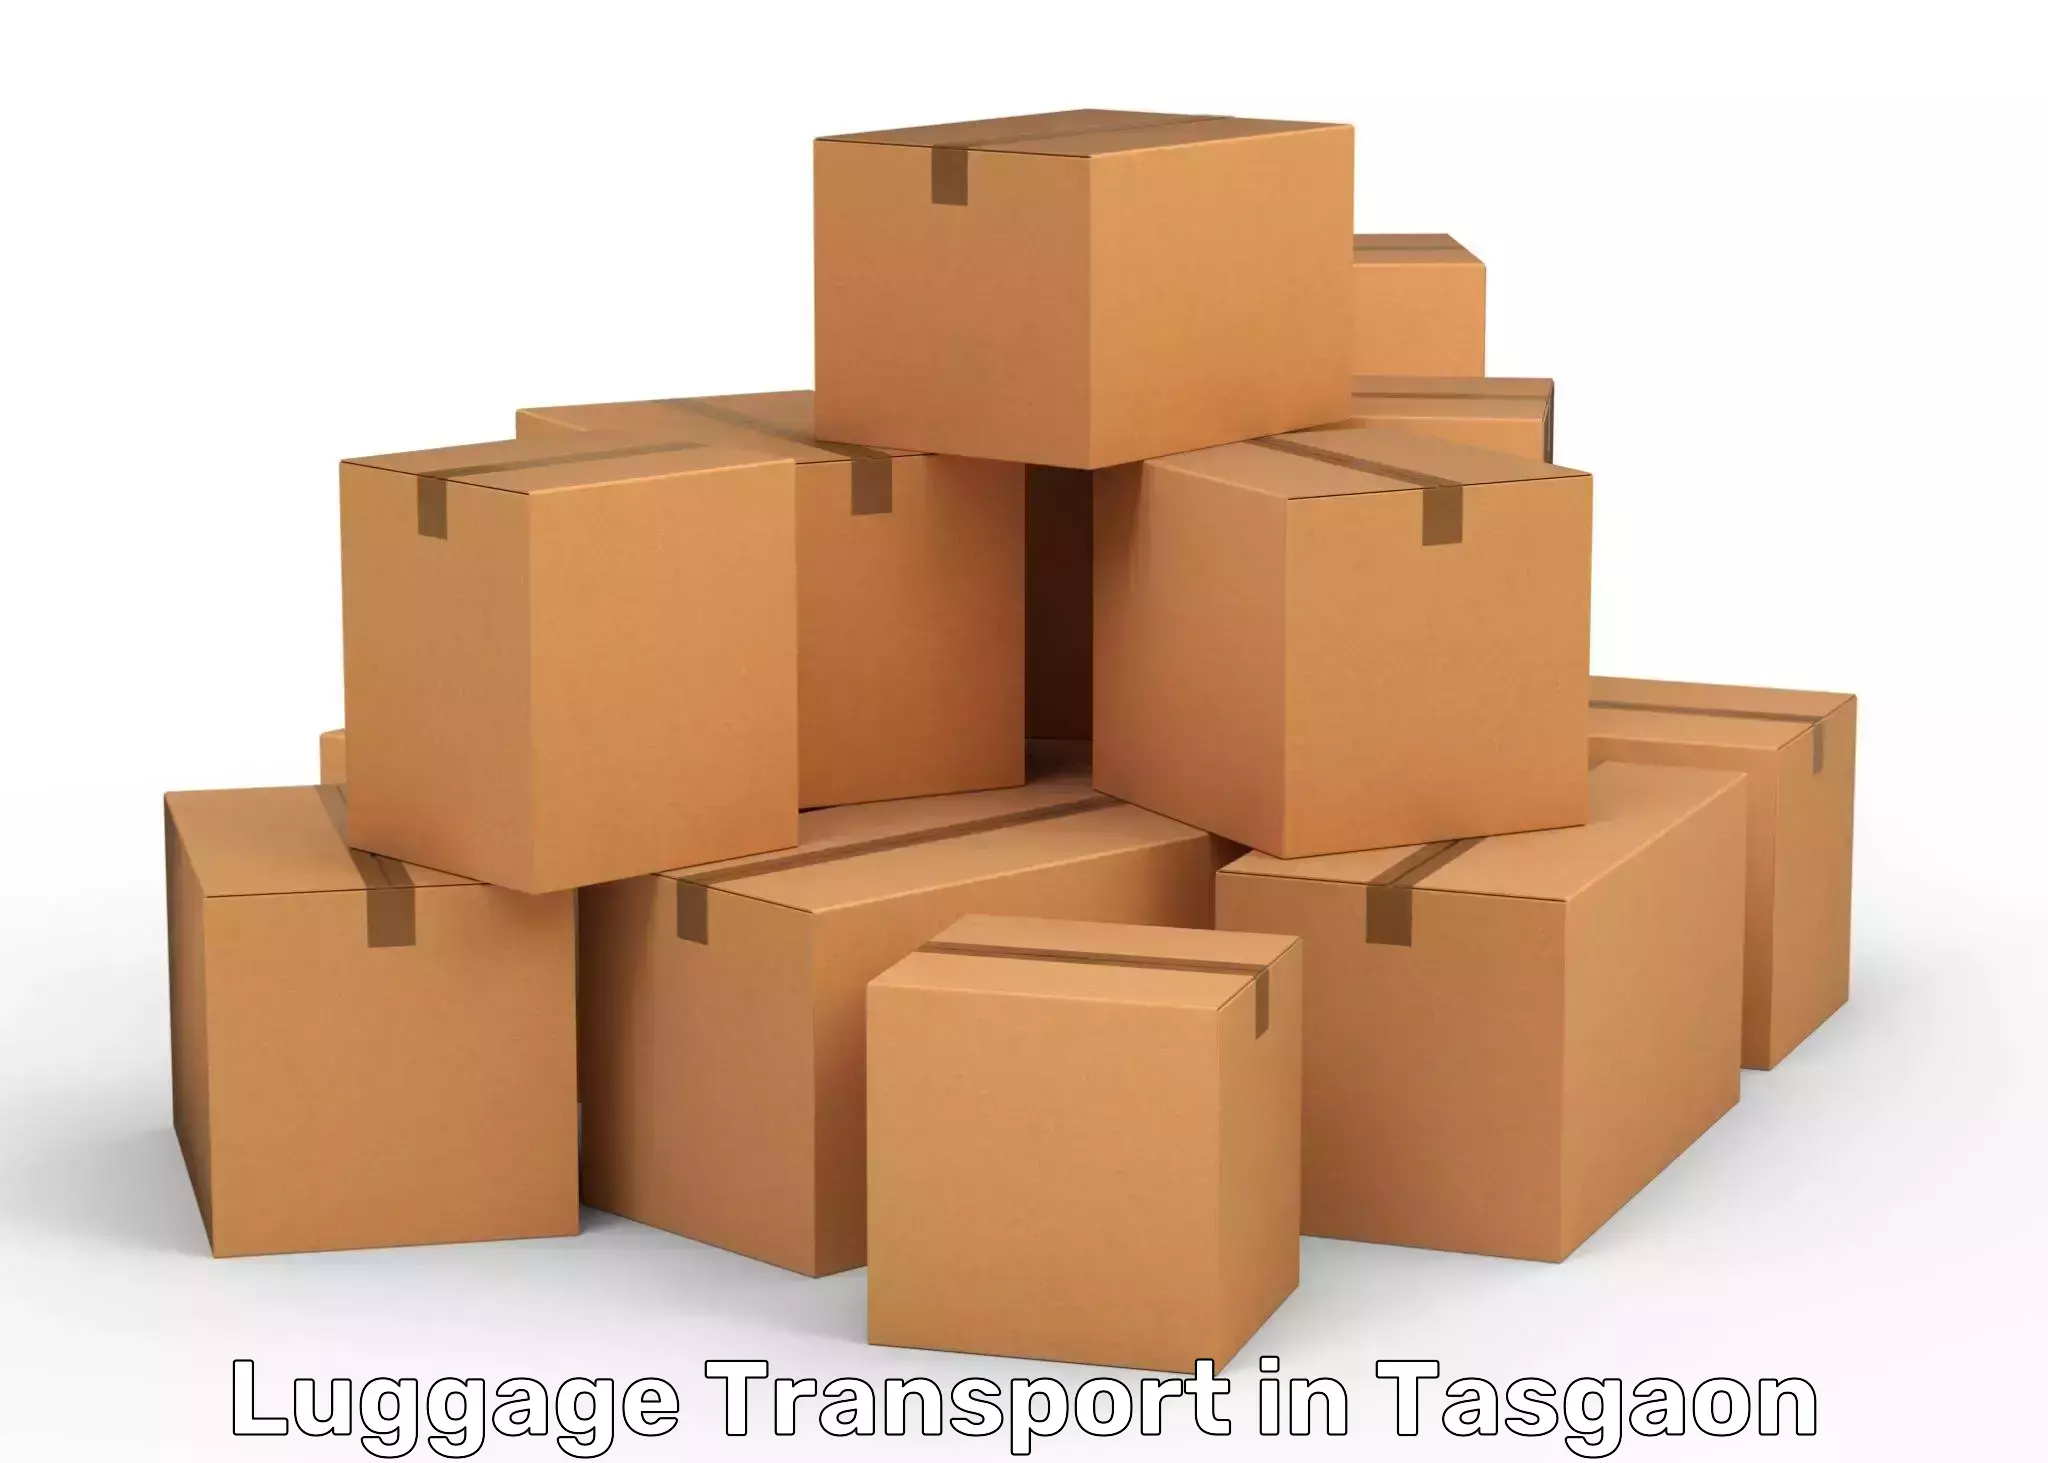 Luggage transport service in Tasgaon